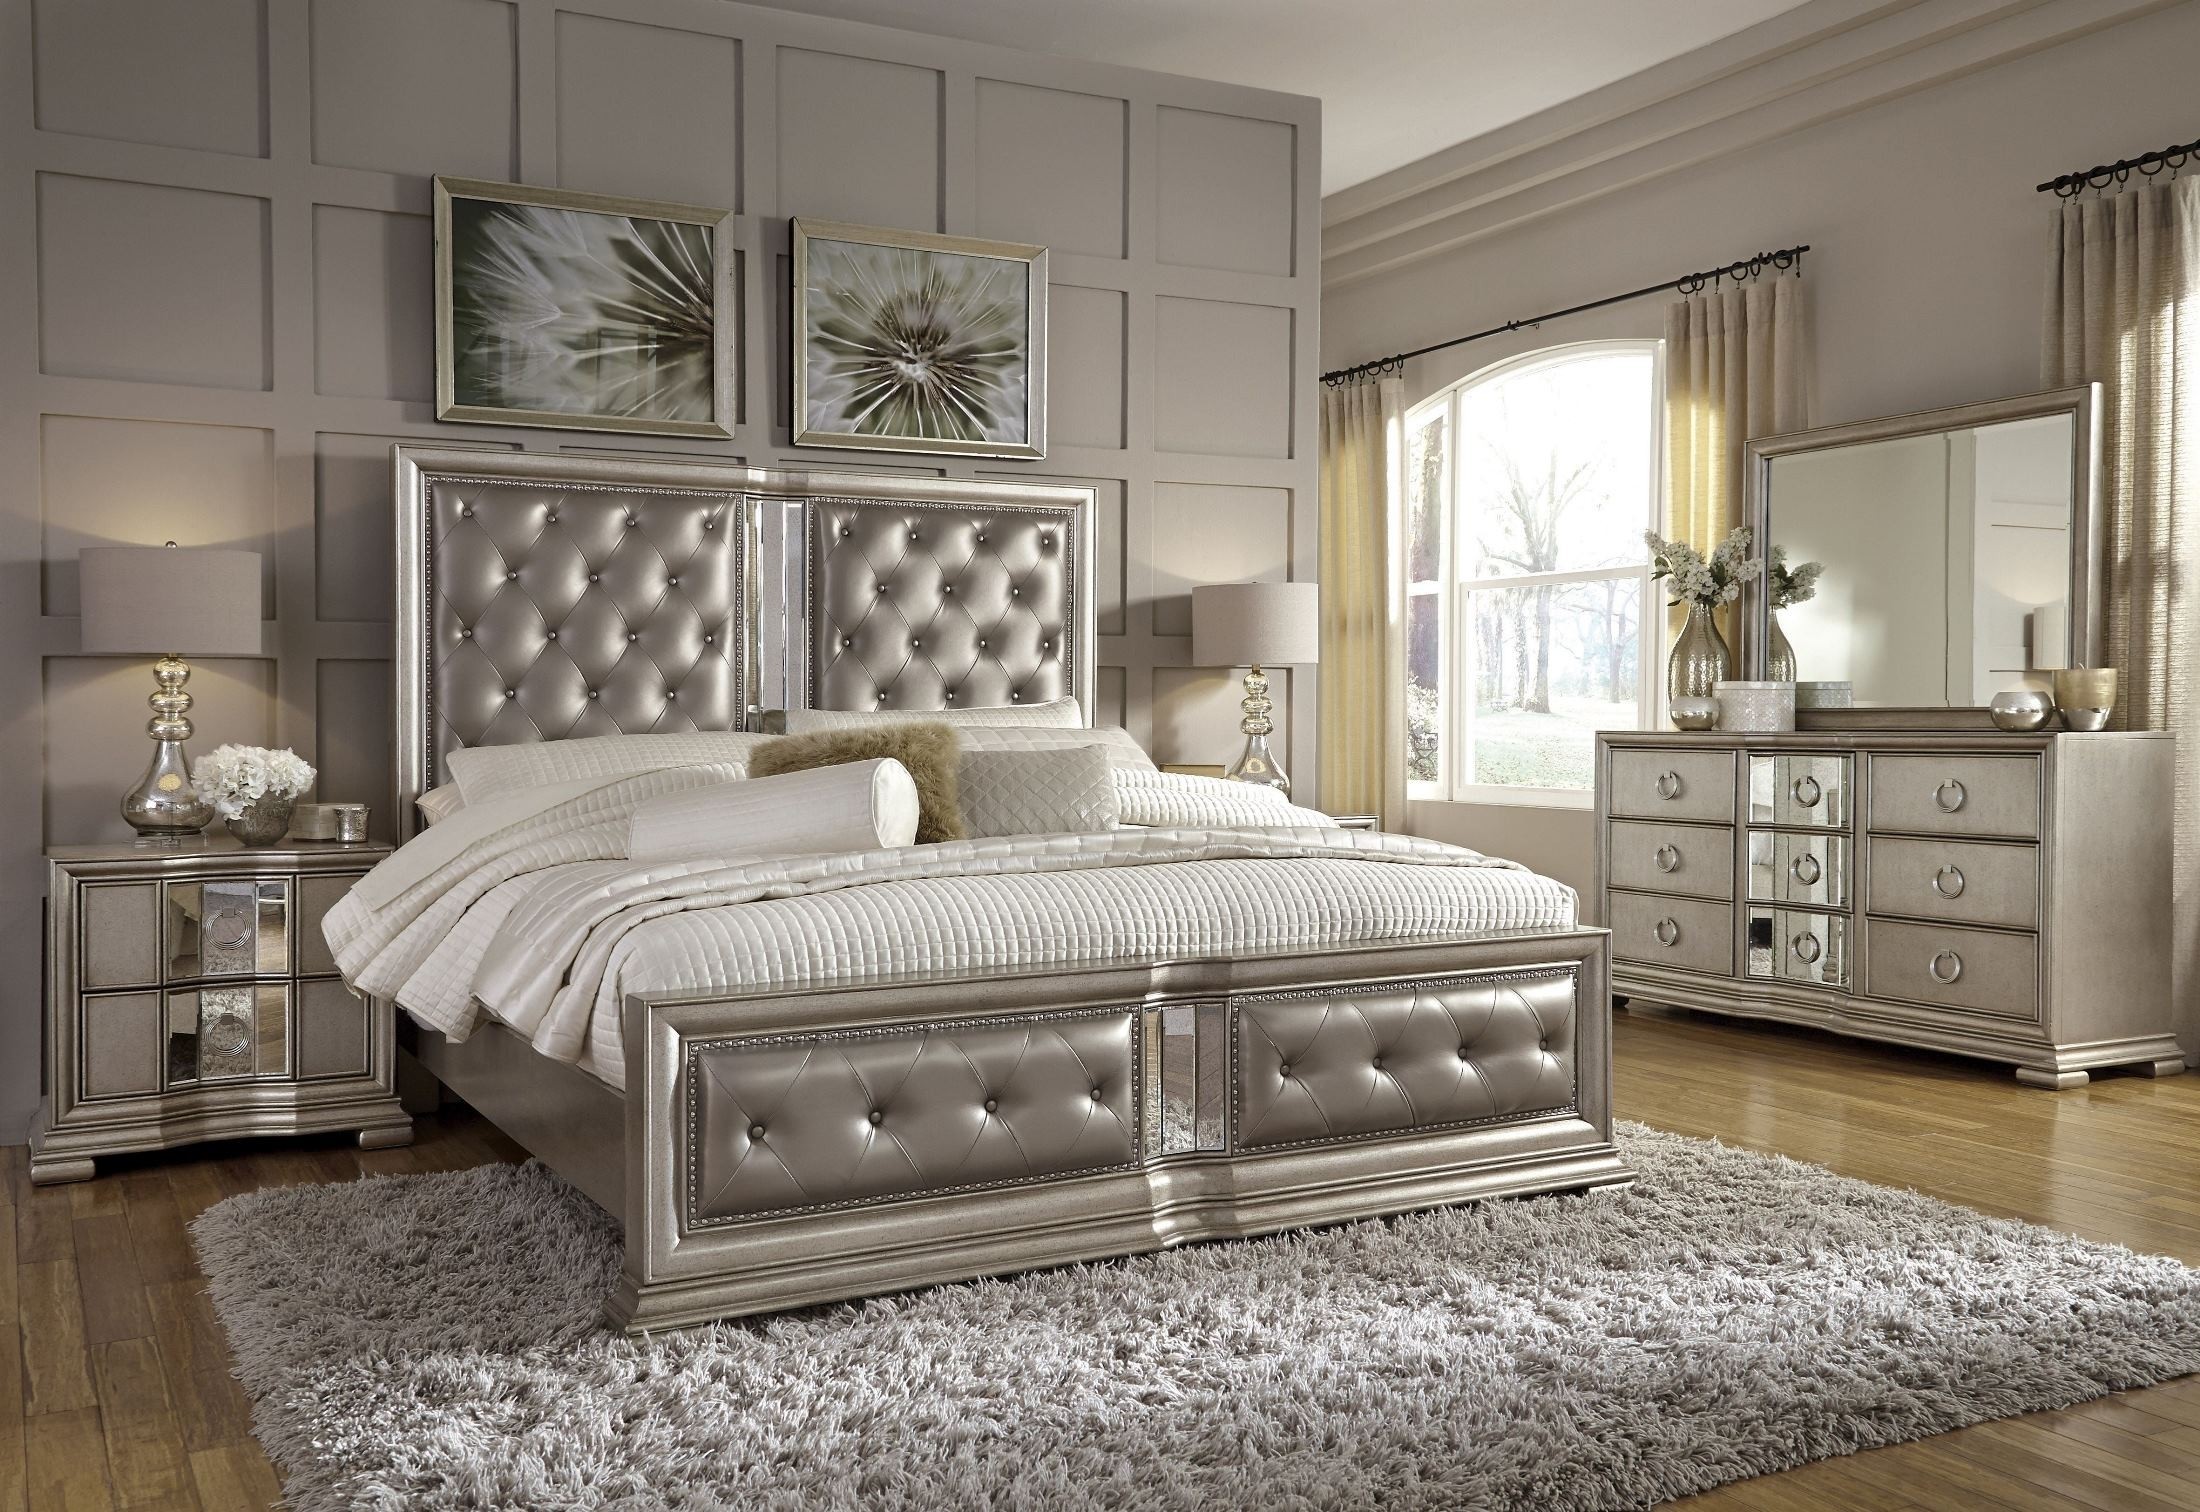 Silver Bedroom Furniture Ideas On Foter